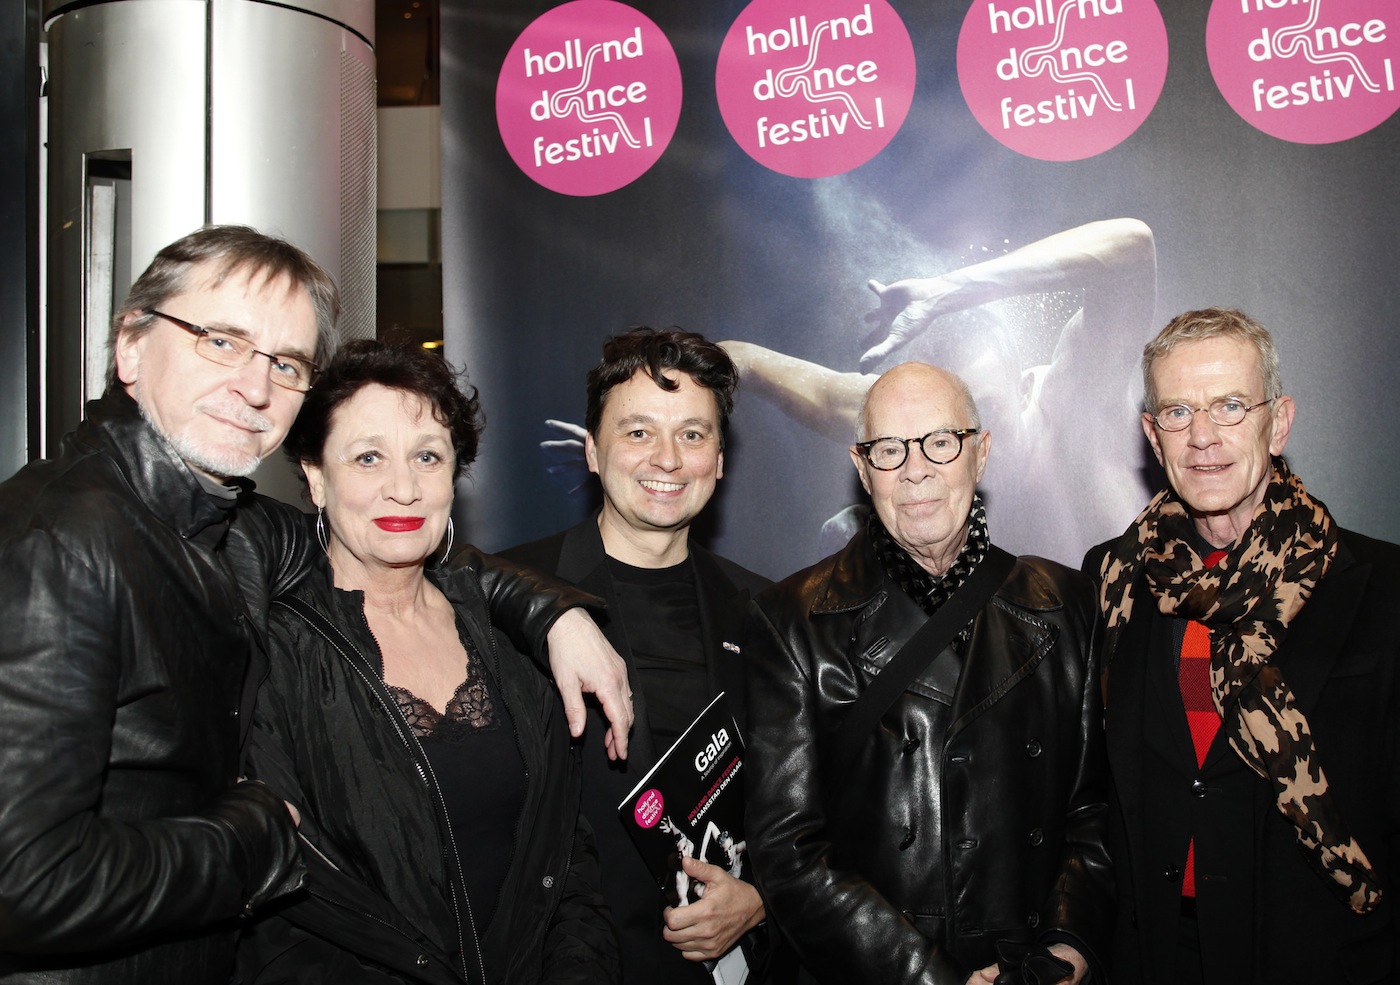 Gala Holland Dance Festival 2014 vlnr: Jiri Kylian, Sabine Kupferberg, Samuel Wuersten, Hans van Manen, Henk van Dijk. (Foto: Antoinette Mooy)